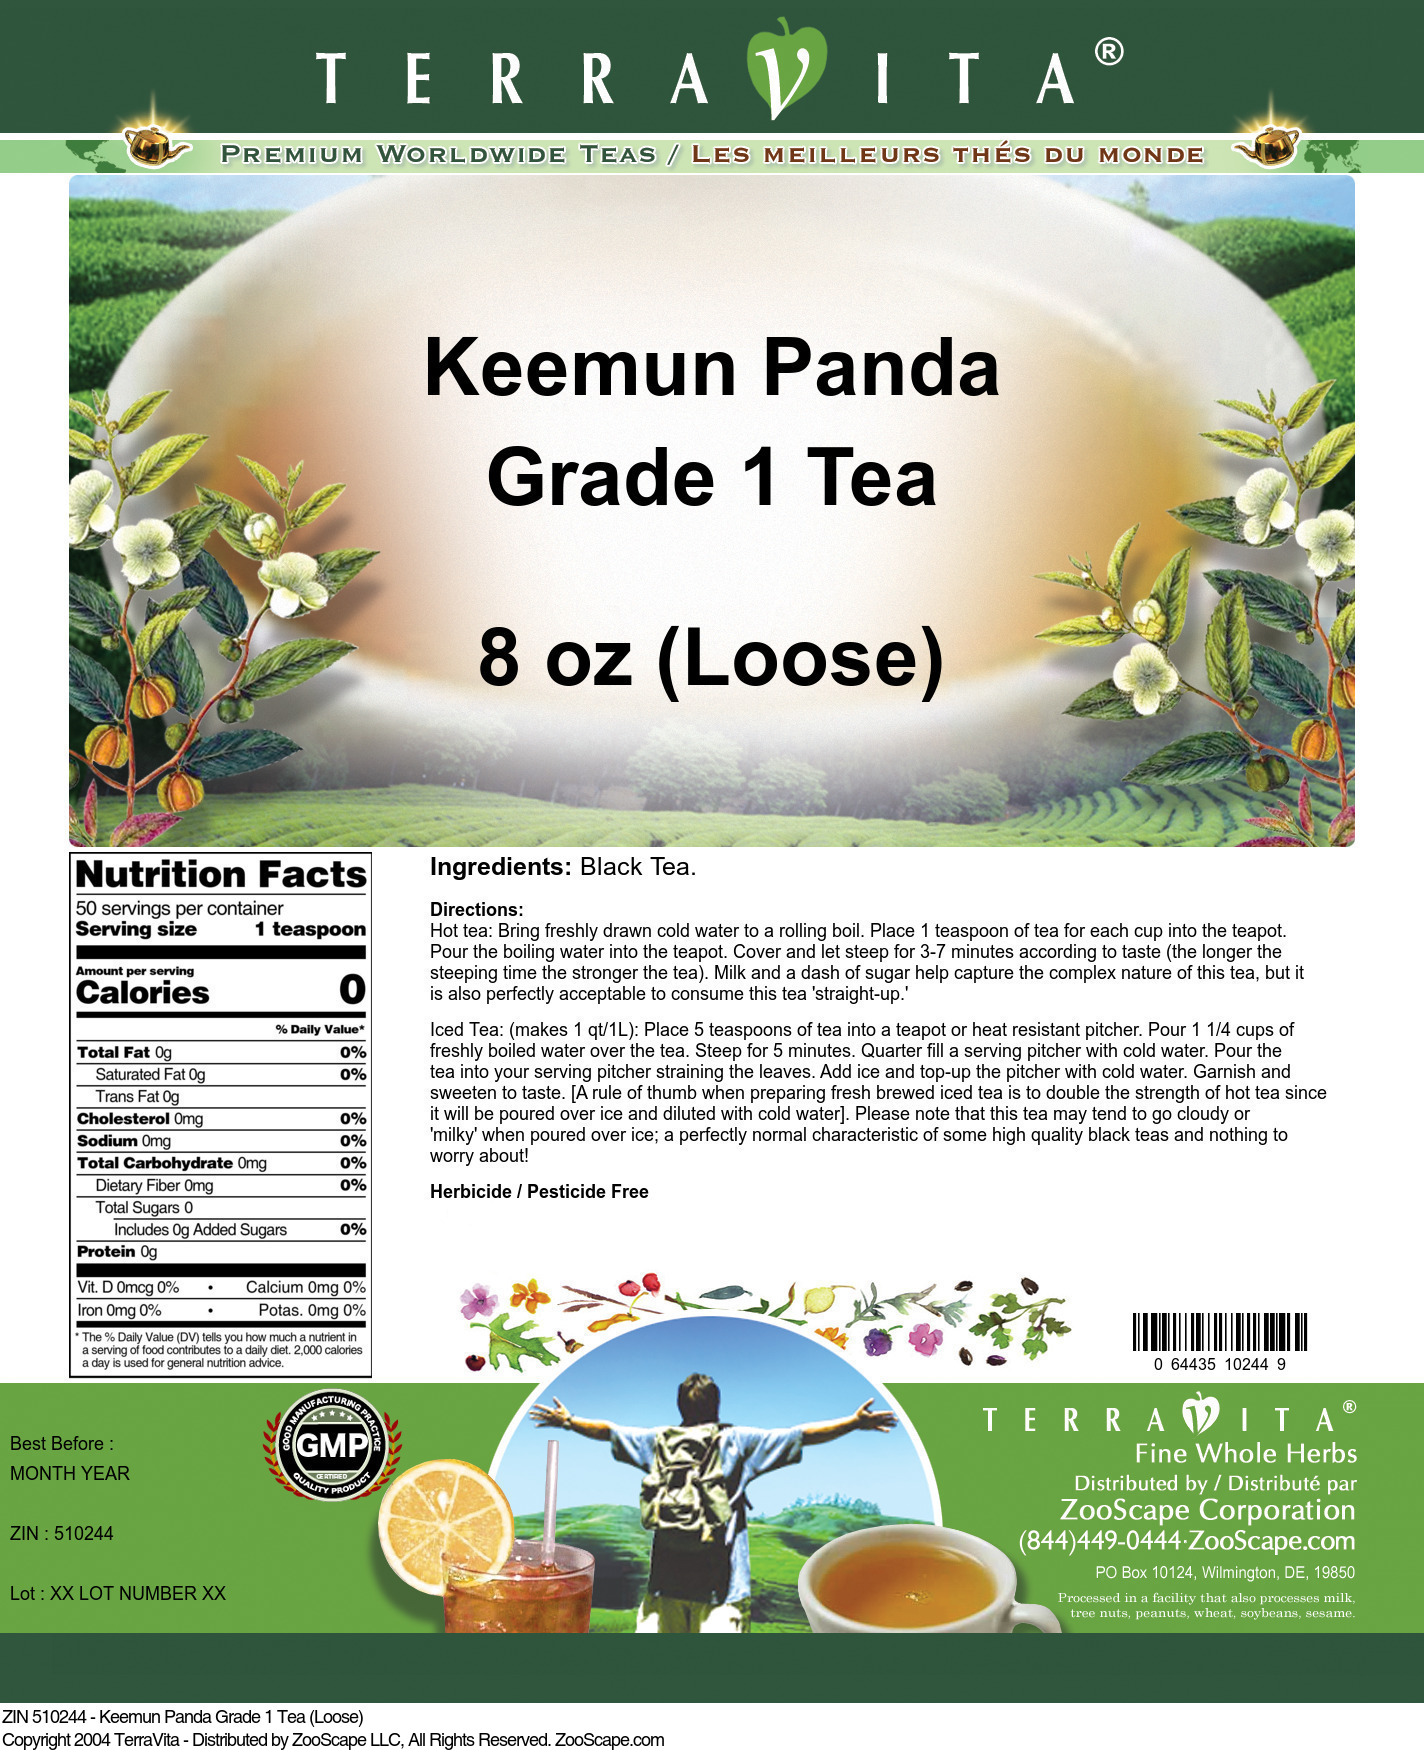 Keemun Panda Grade 1 Tea (Loose) - Label